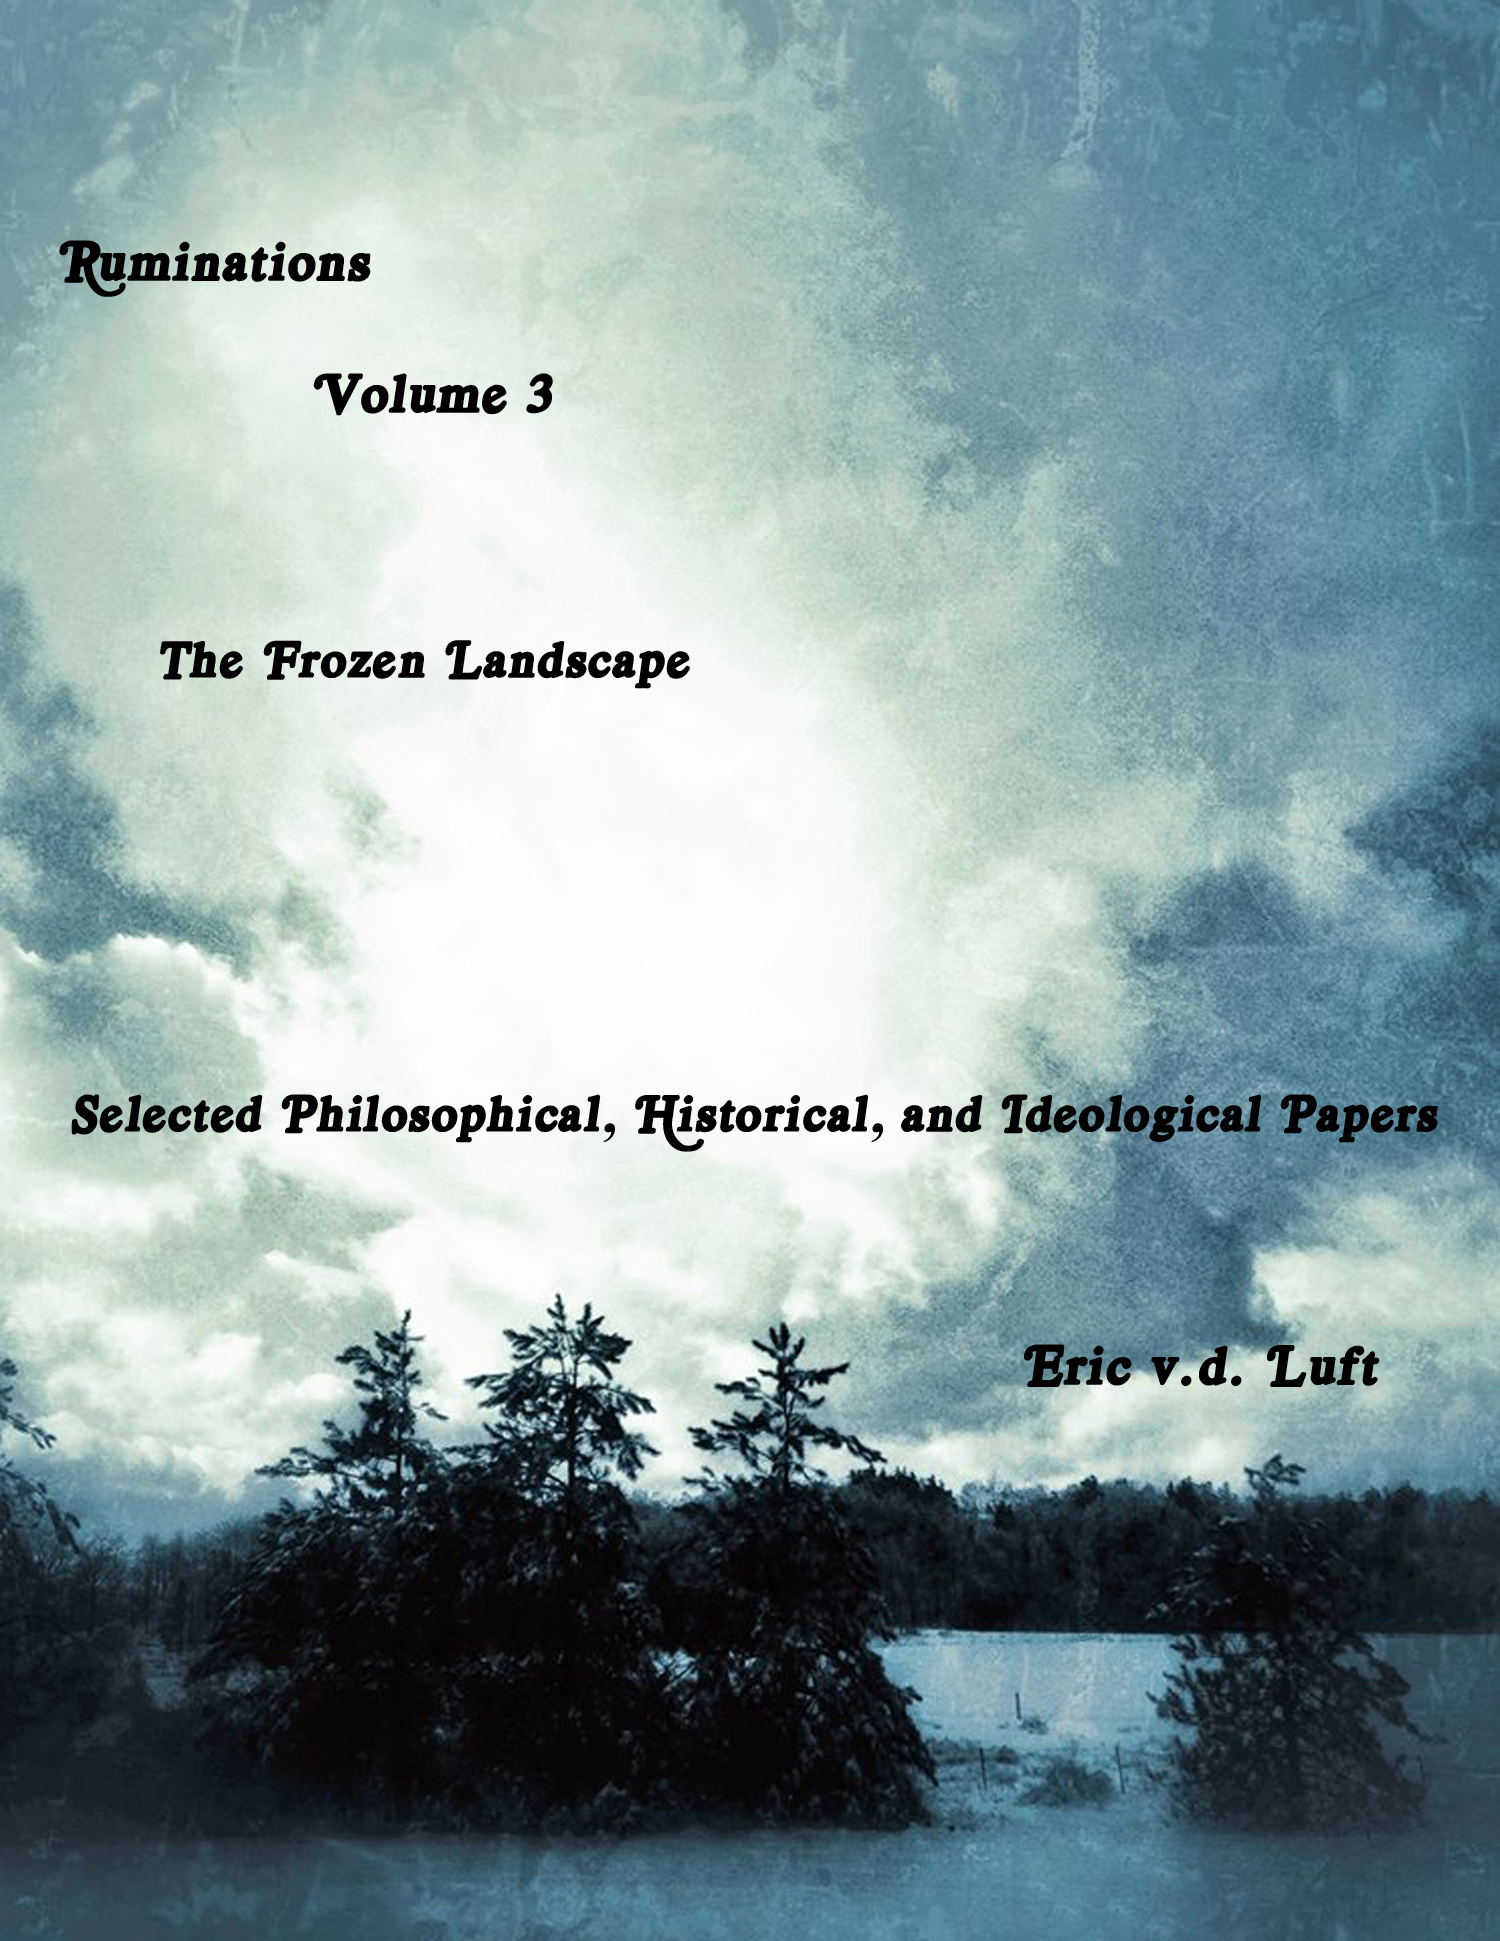 Ruminations, Volume 3: The Frozen Landscape by Eric v.d. Luft